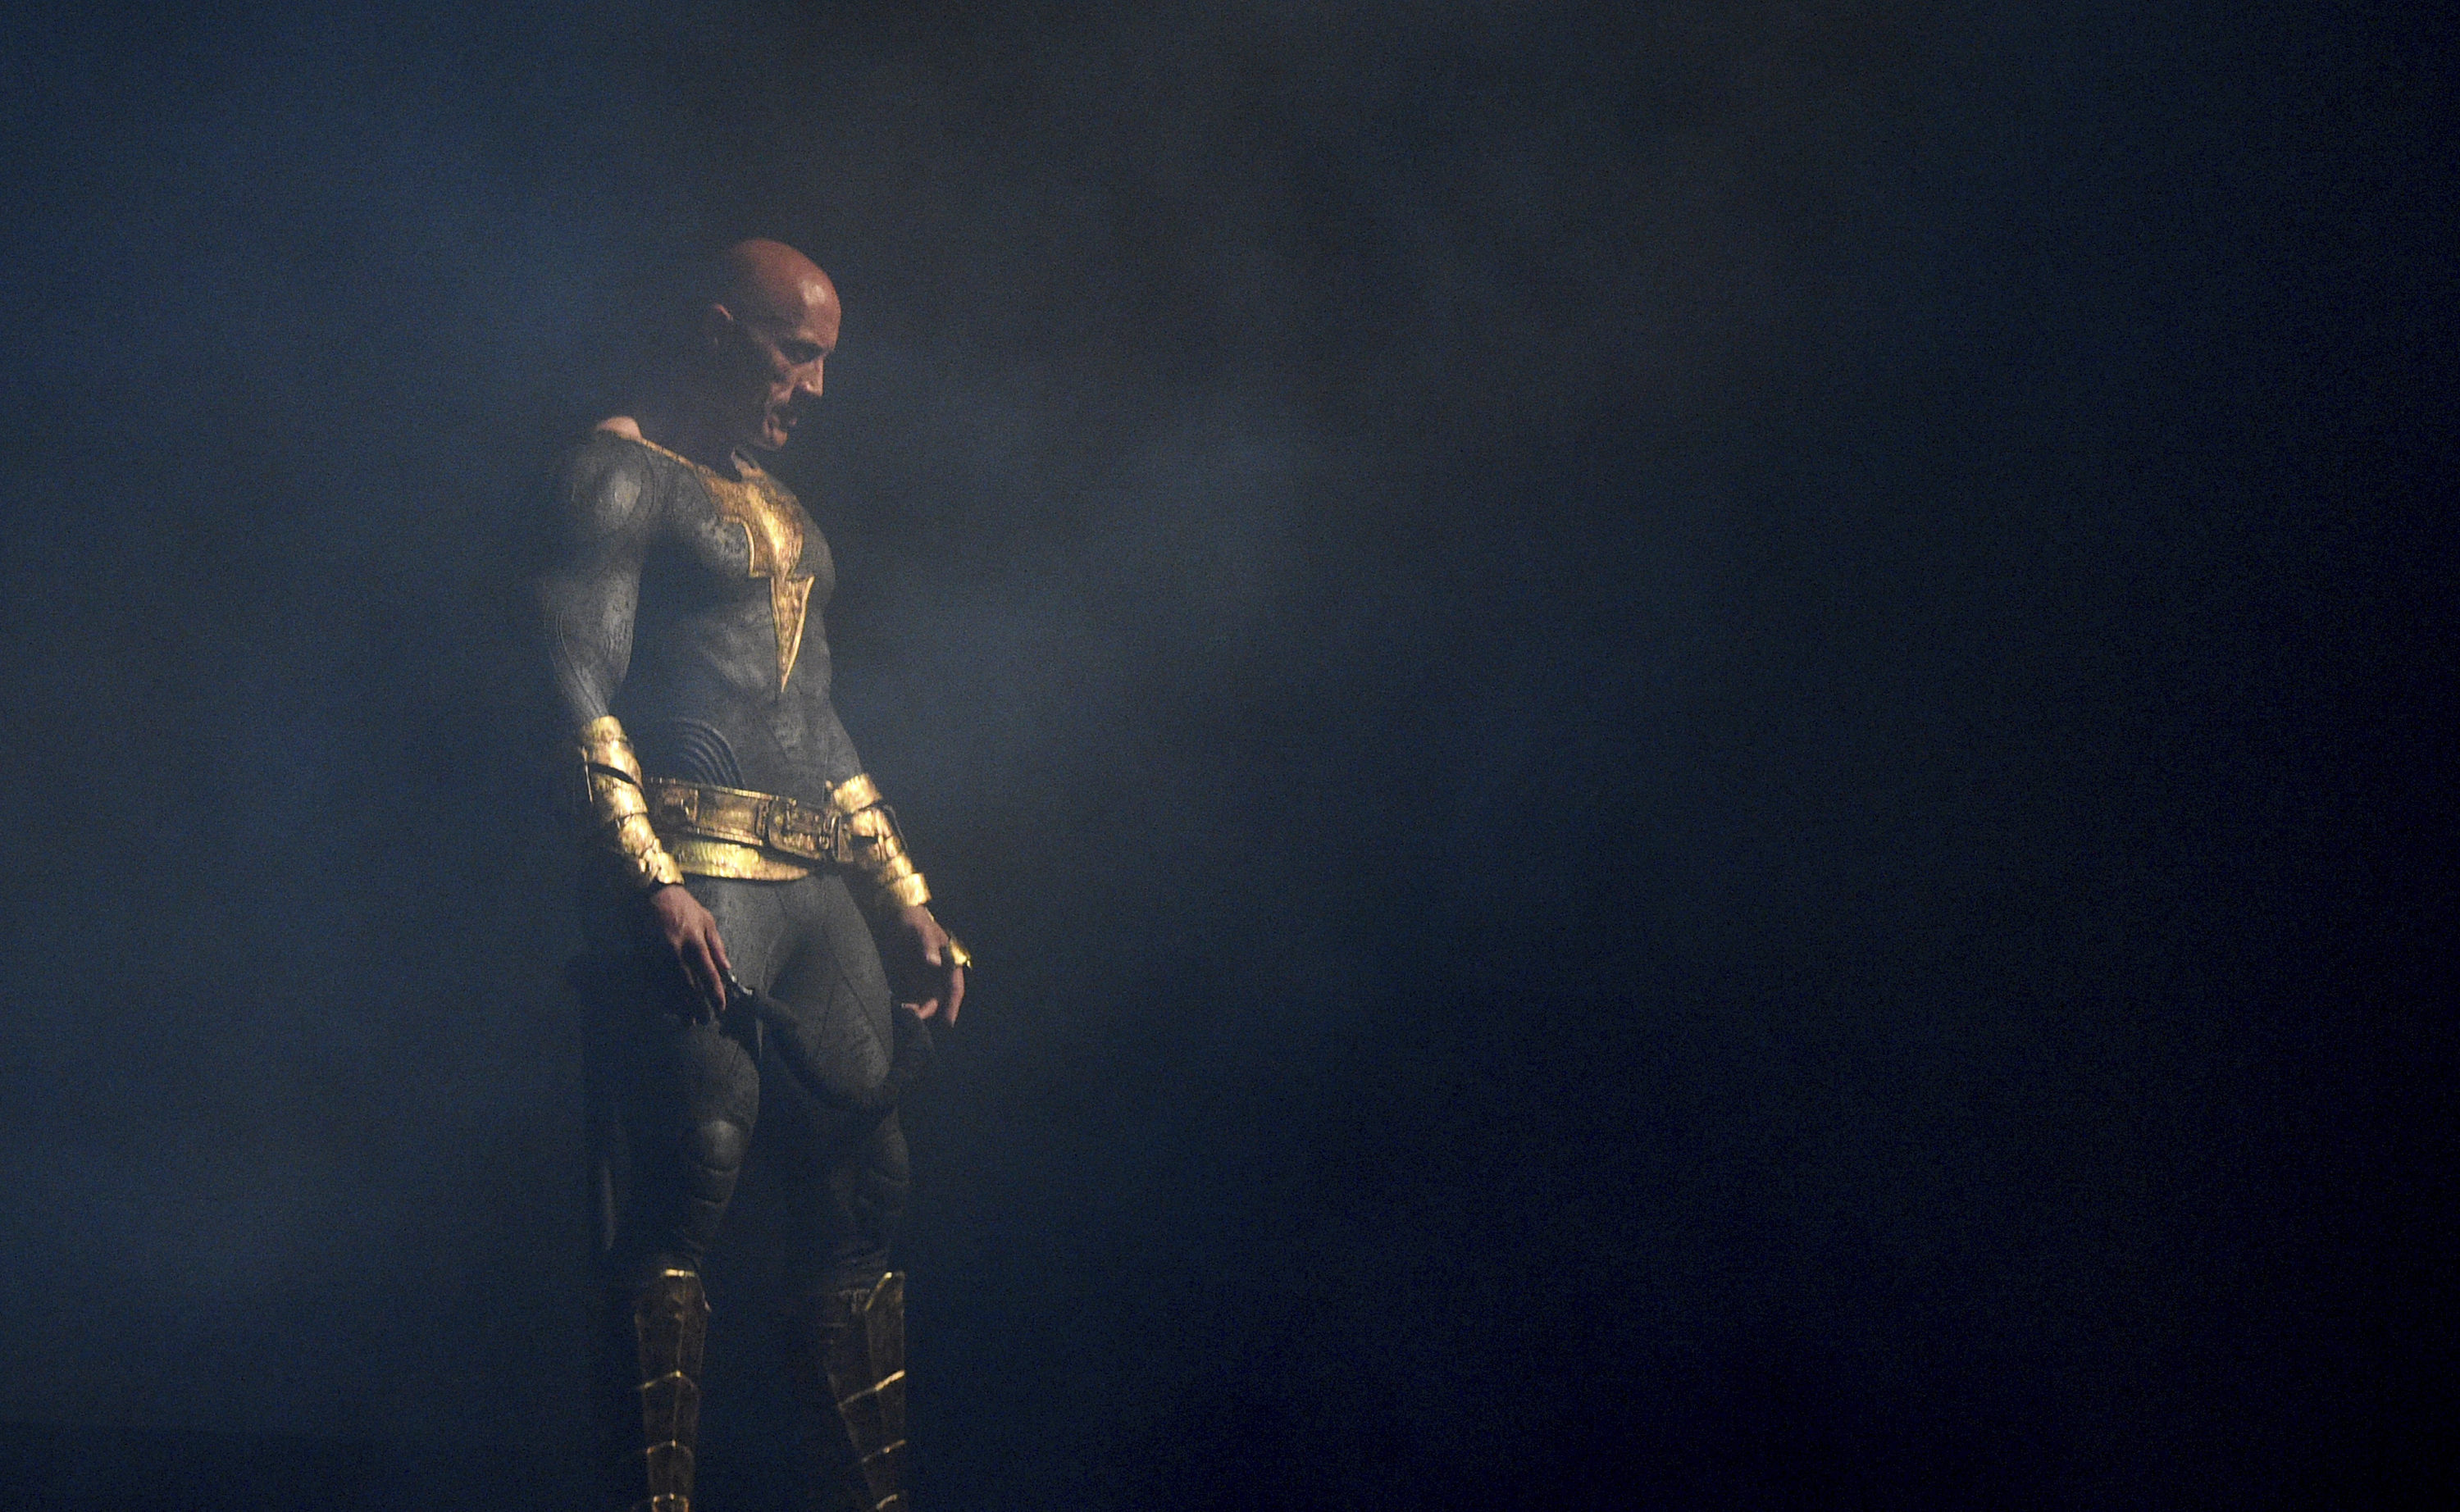 Warner Bros. Teases 'Shazam: Fury of The Gods' at CinemaCon